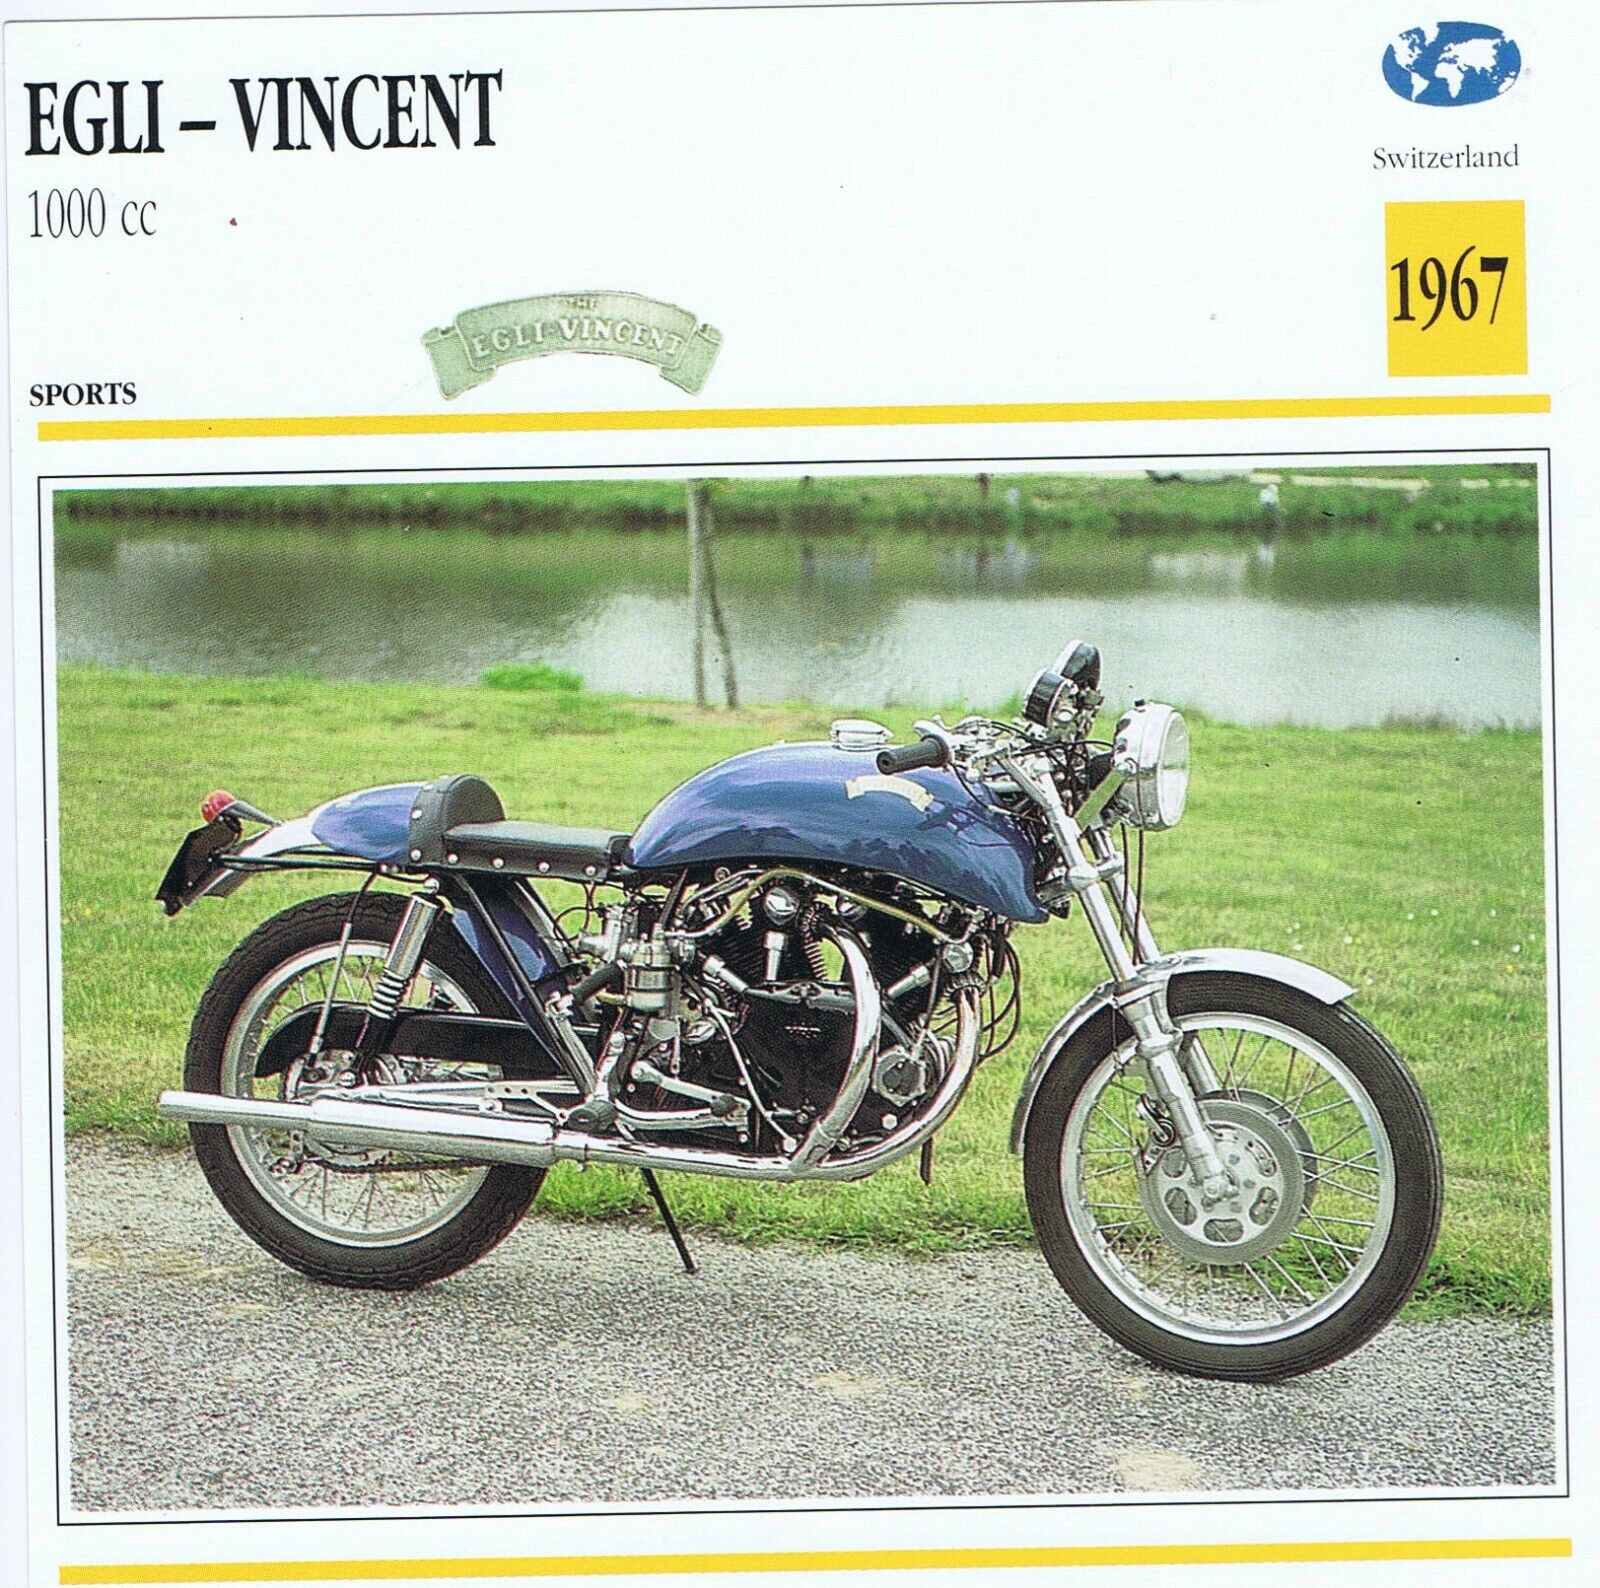 1967 Article - Egli-vincent 1000cc Sports Bike